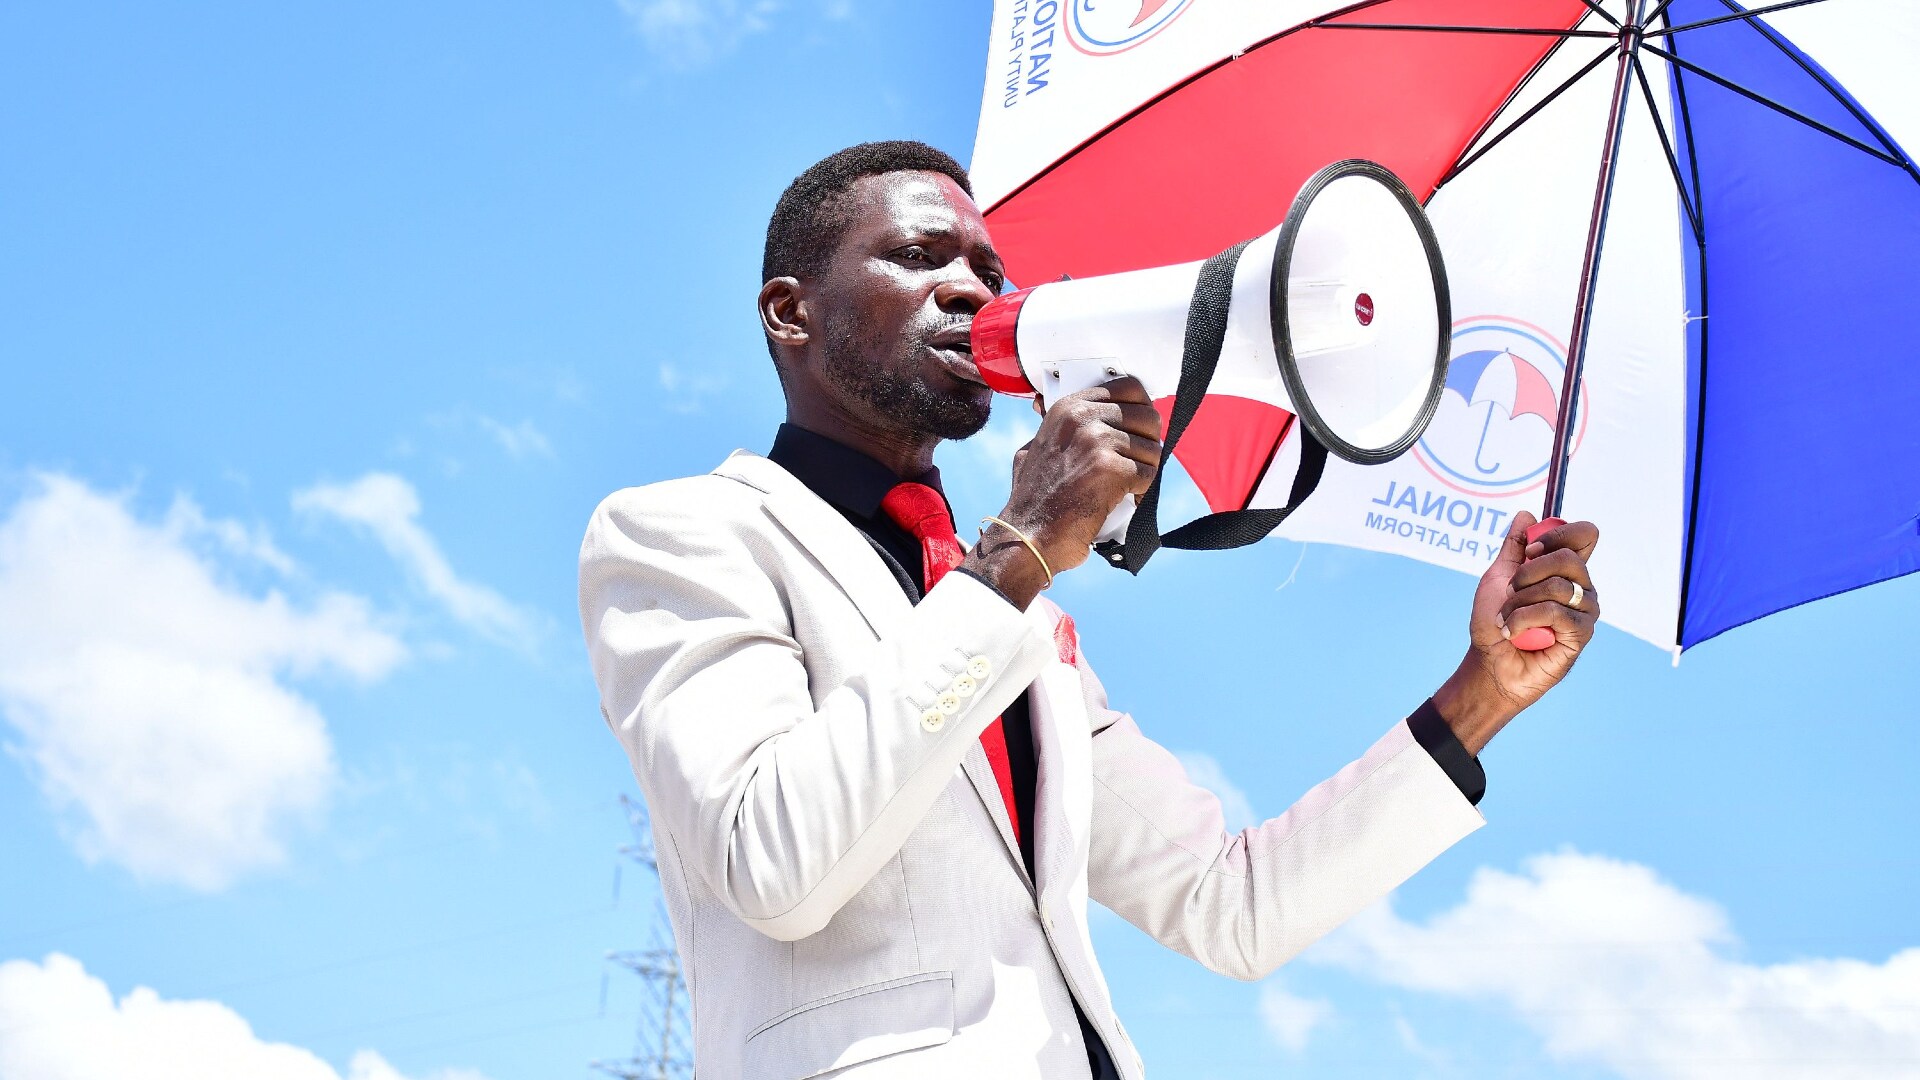 Bobi Wine: The People's President - Trailer Video (Film Page)